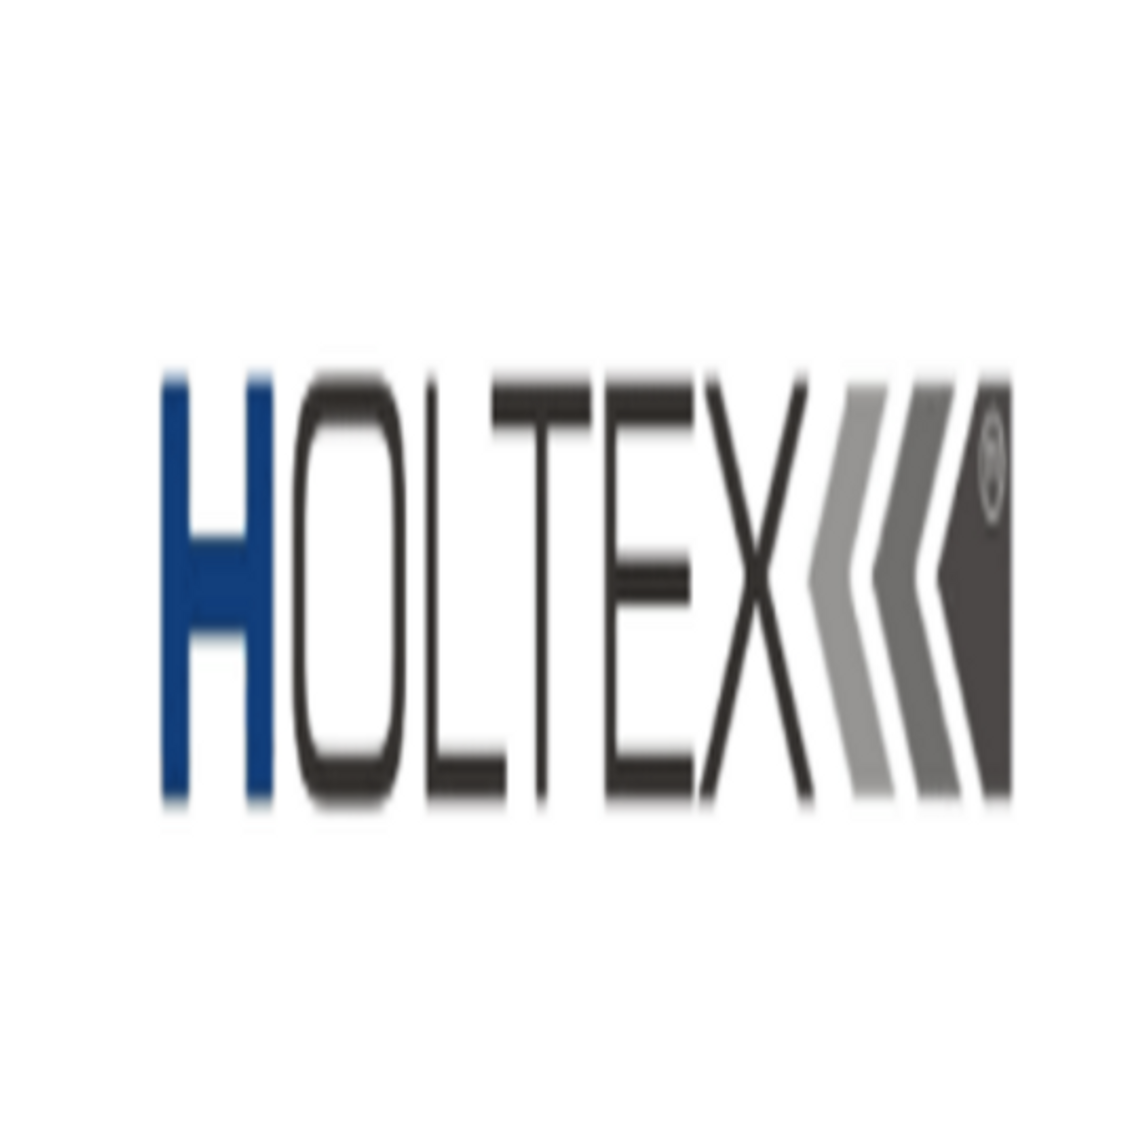 Holtex